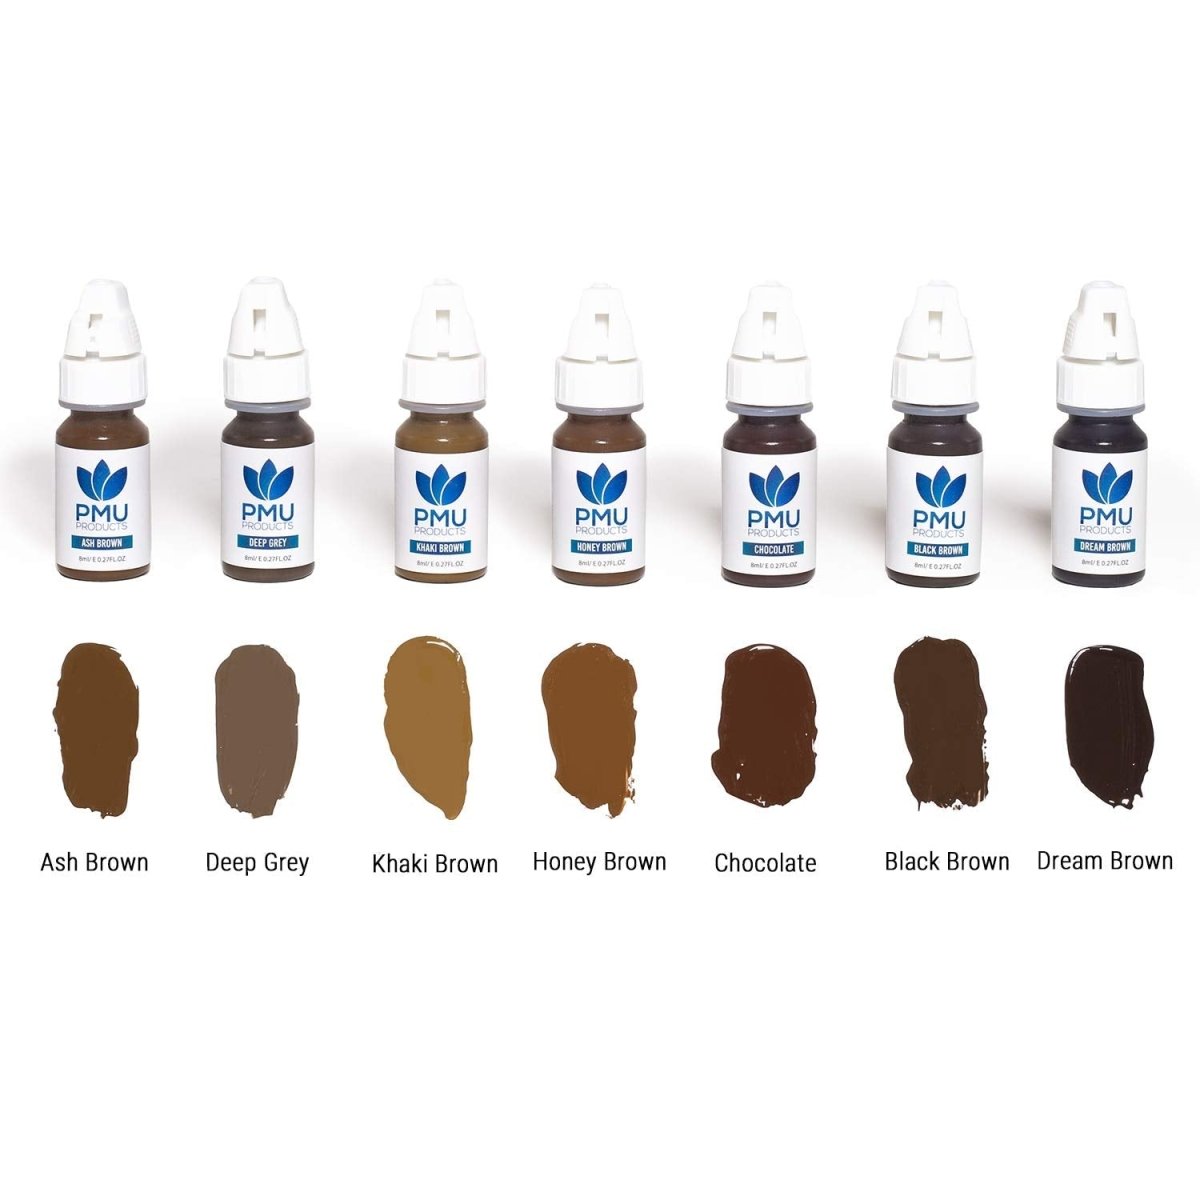 PMU PRODUCTS Microblading Ink – Honey Brown